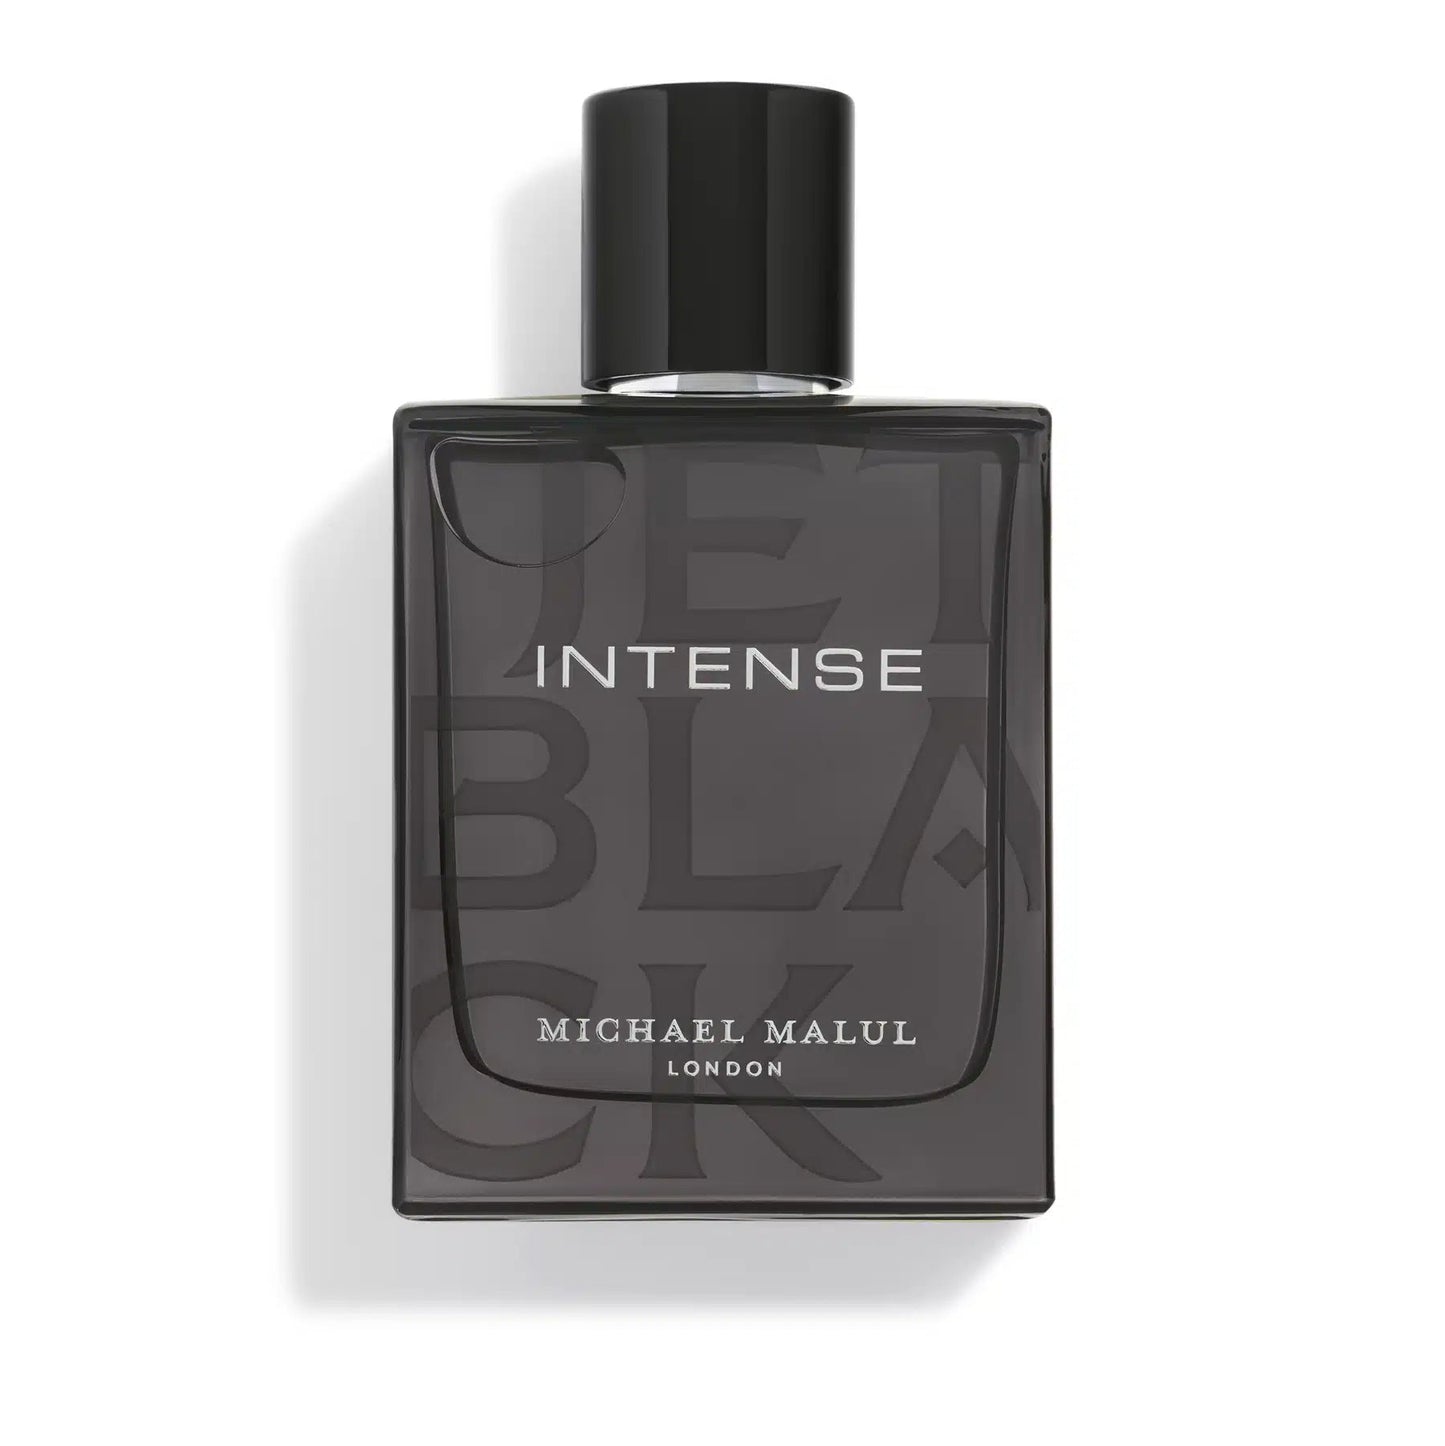 Jet Black Intense by Michael Malul 3.4 oz For Men